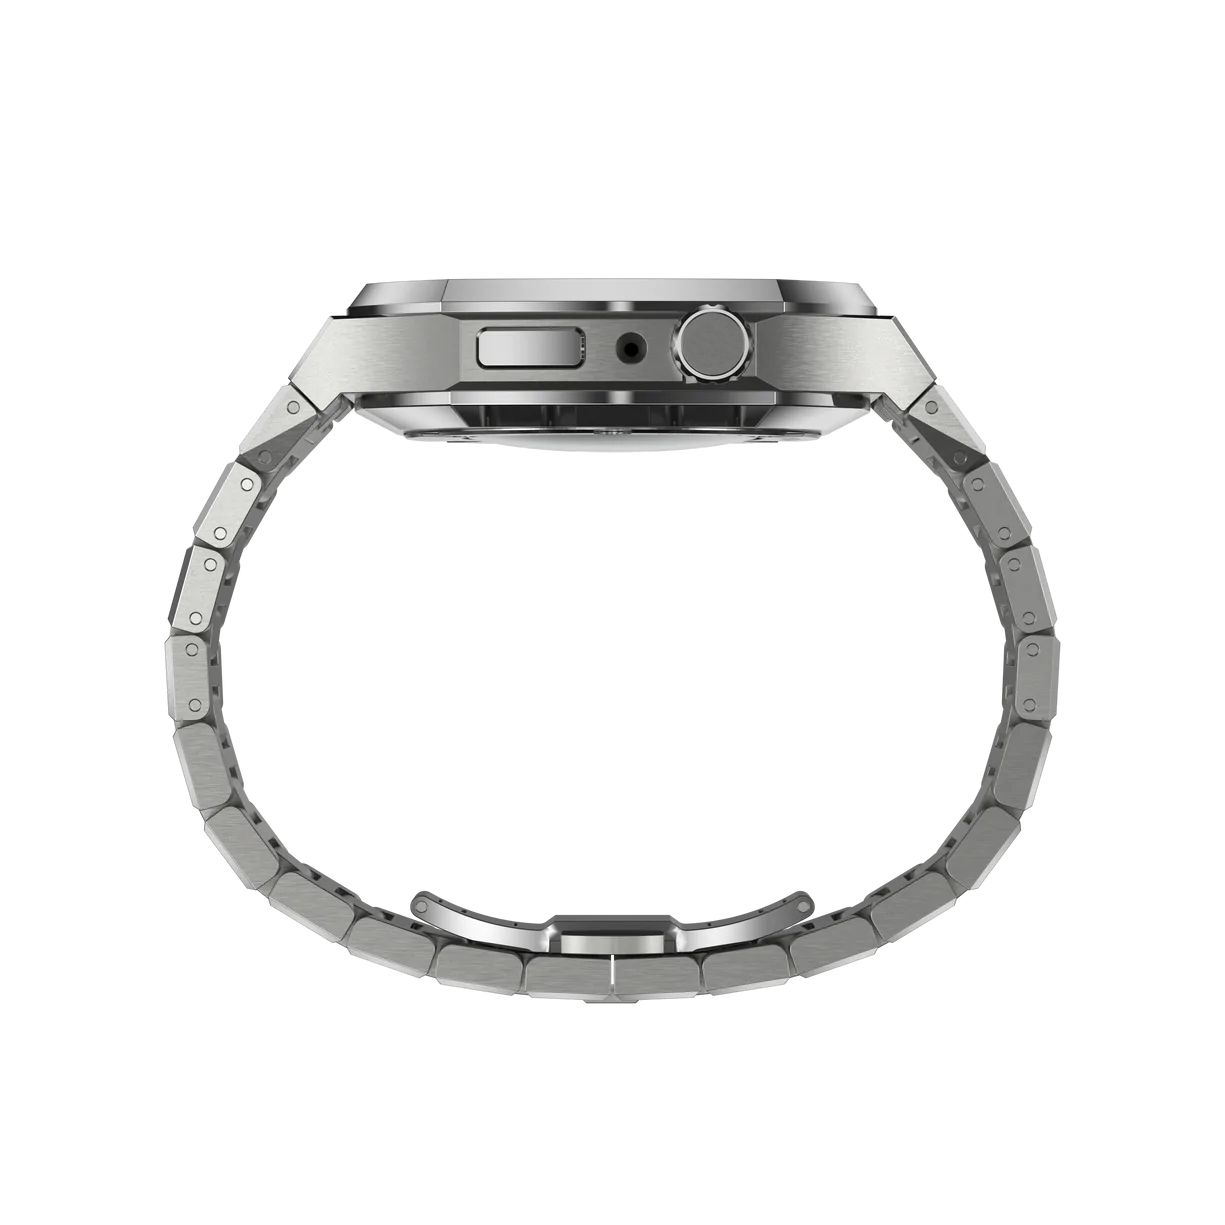 Serie Royal ™ Metal - Cinturino + protezione per Apple Watch 